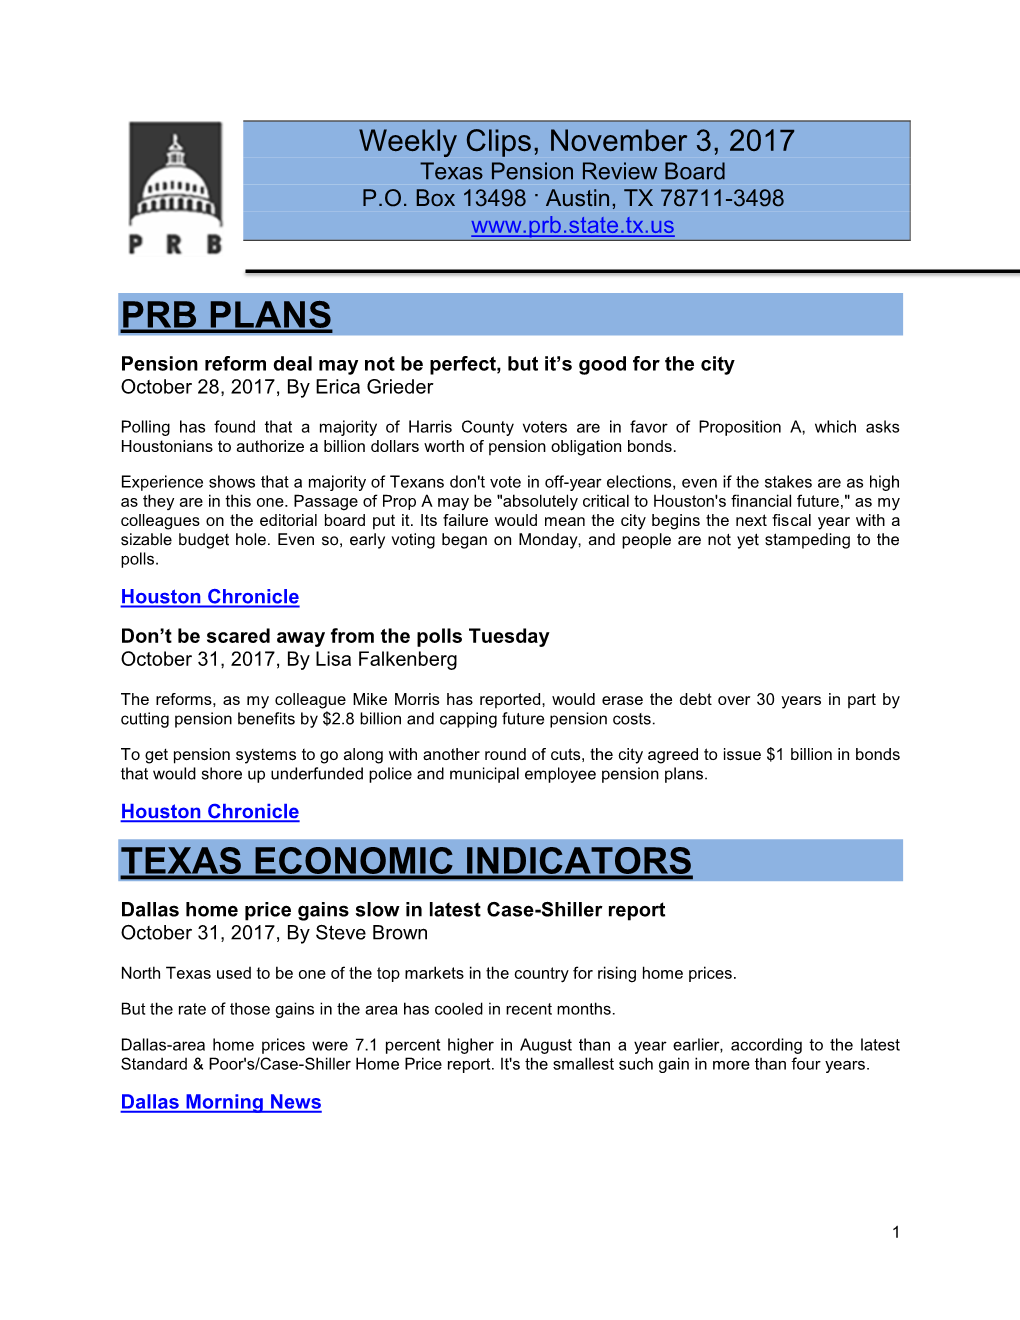 Prb Plans Texas Economic Indicators